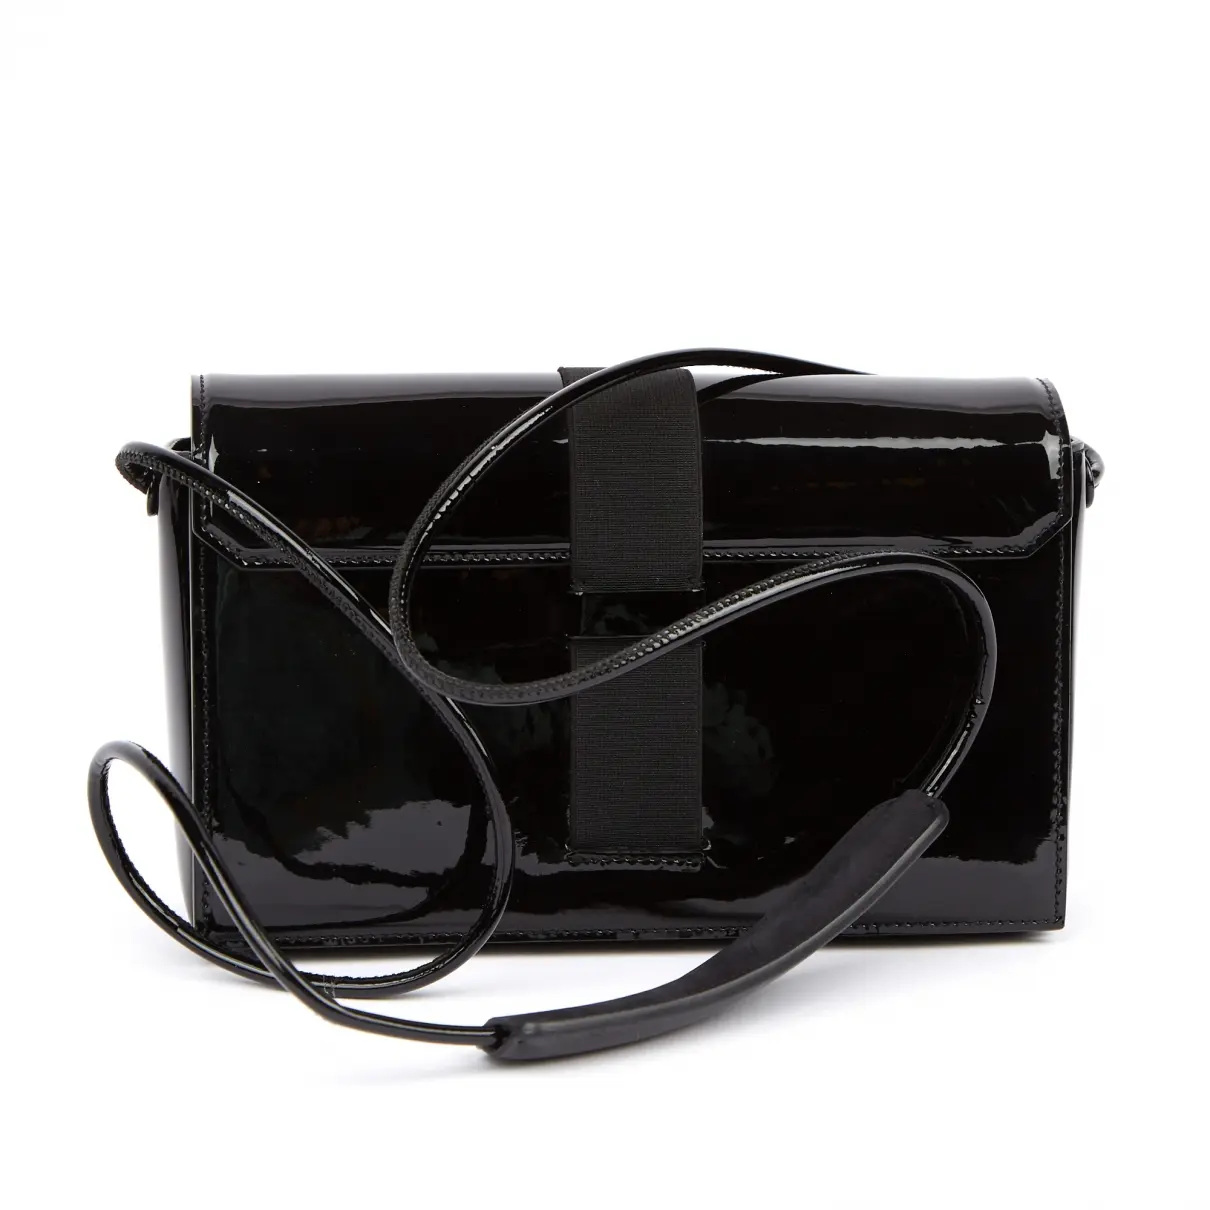 Buy Christopher Kane Patent leather handbag online